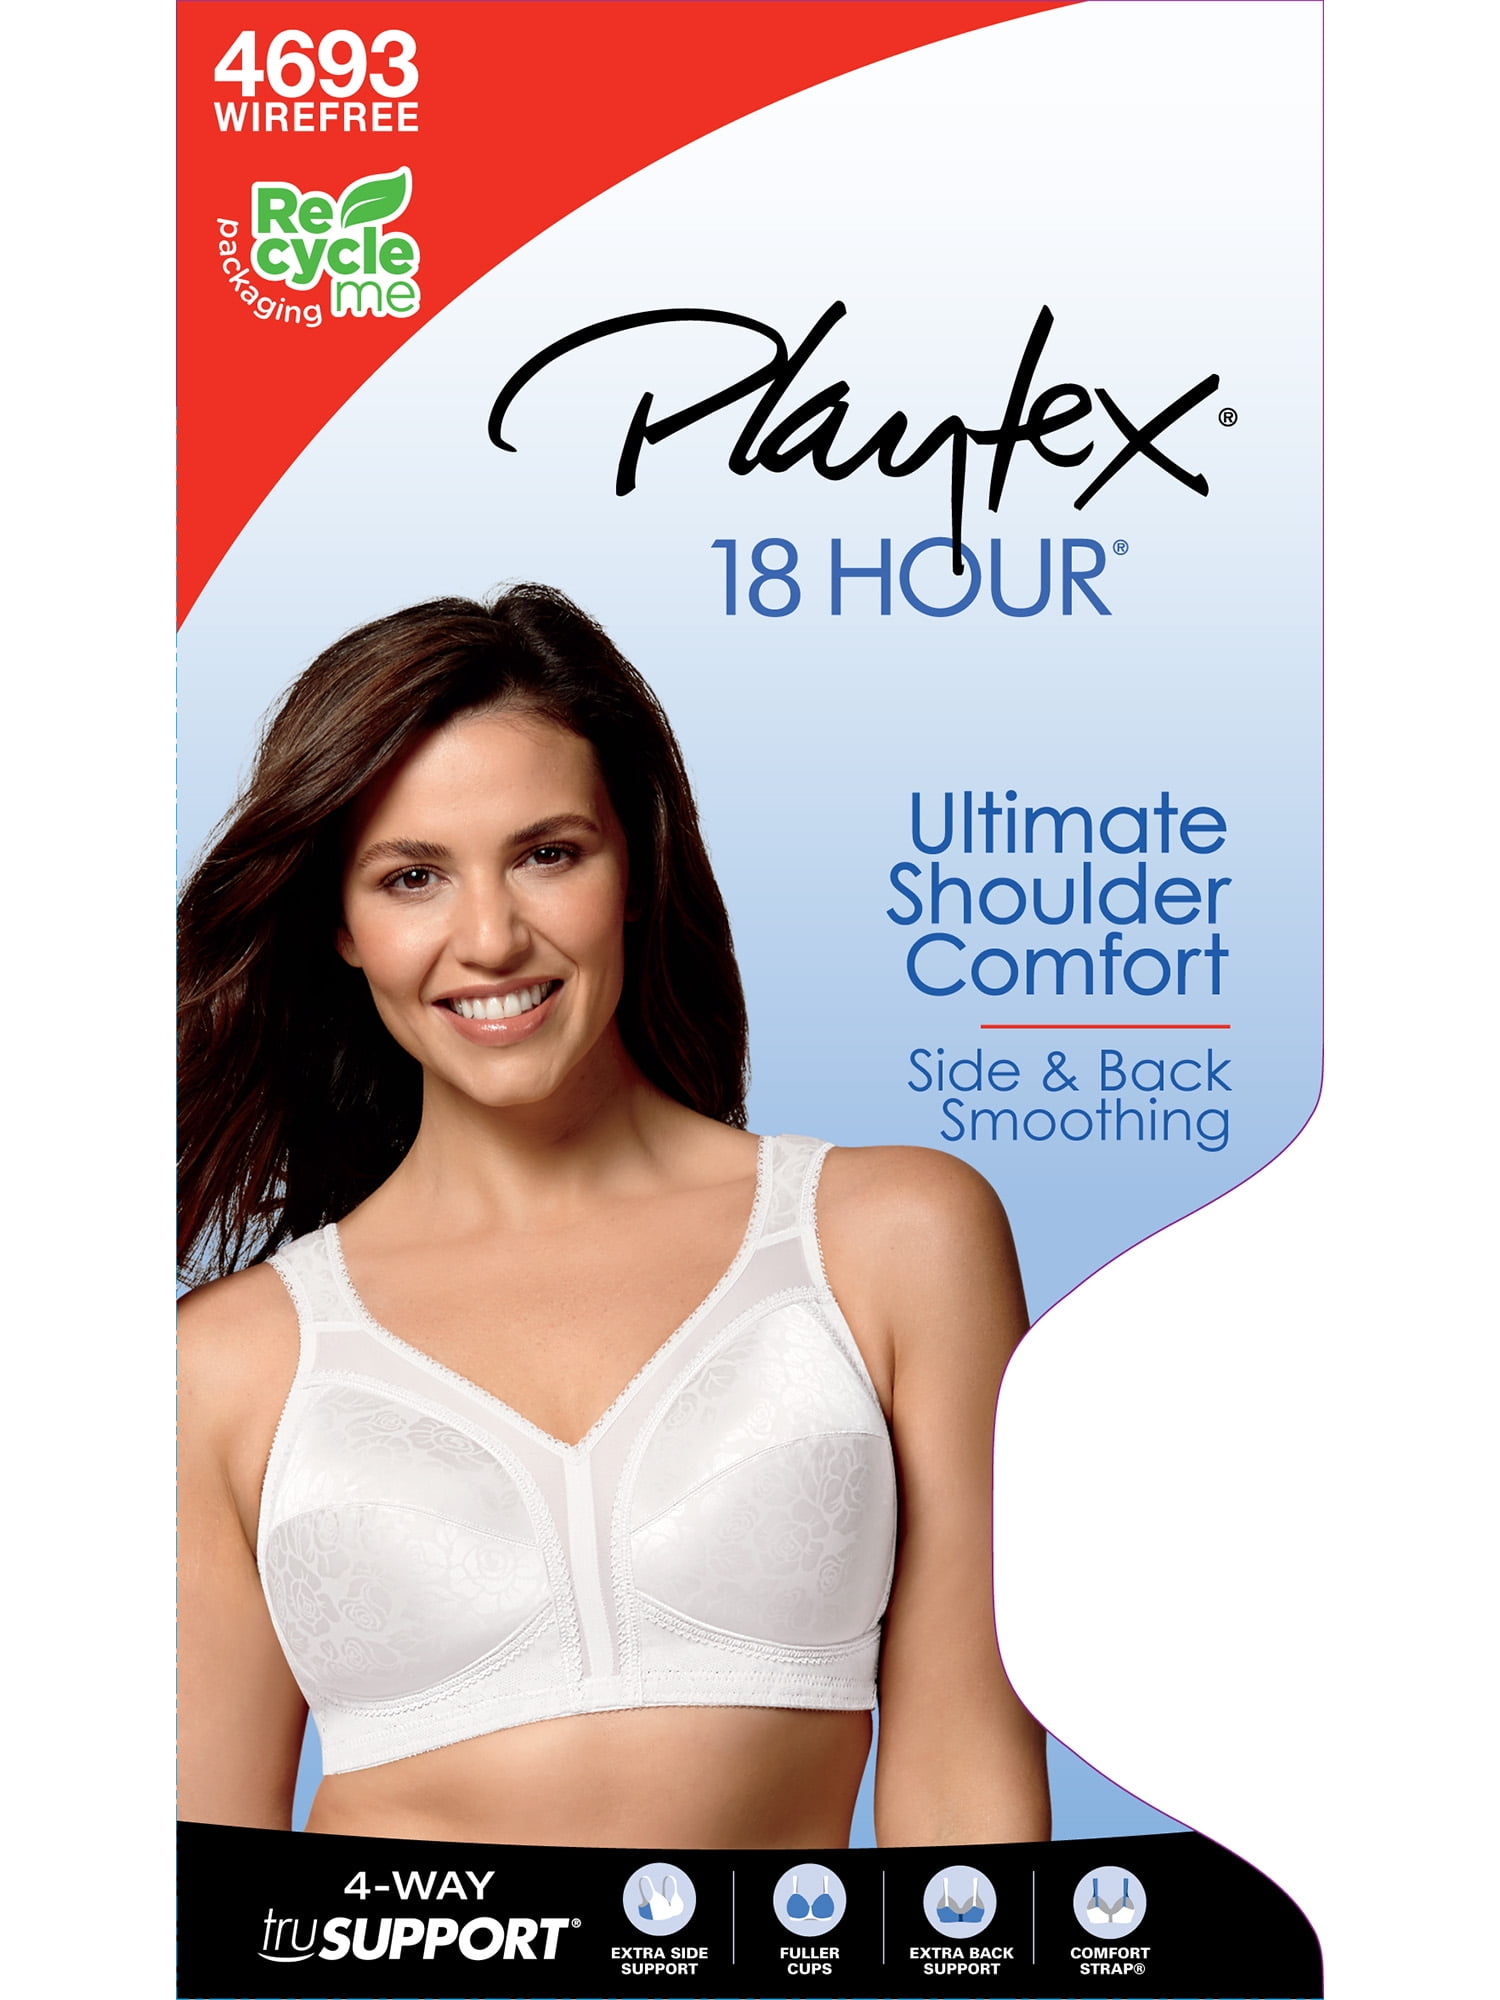 Playtex 18 Hour Ultimate Shoulder Comfort Wireless Bra Toffee 54DDD Women's